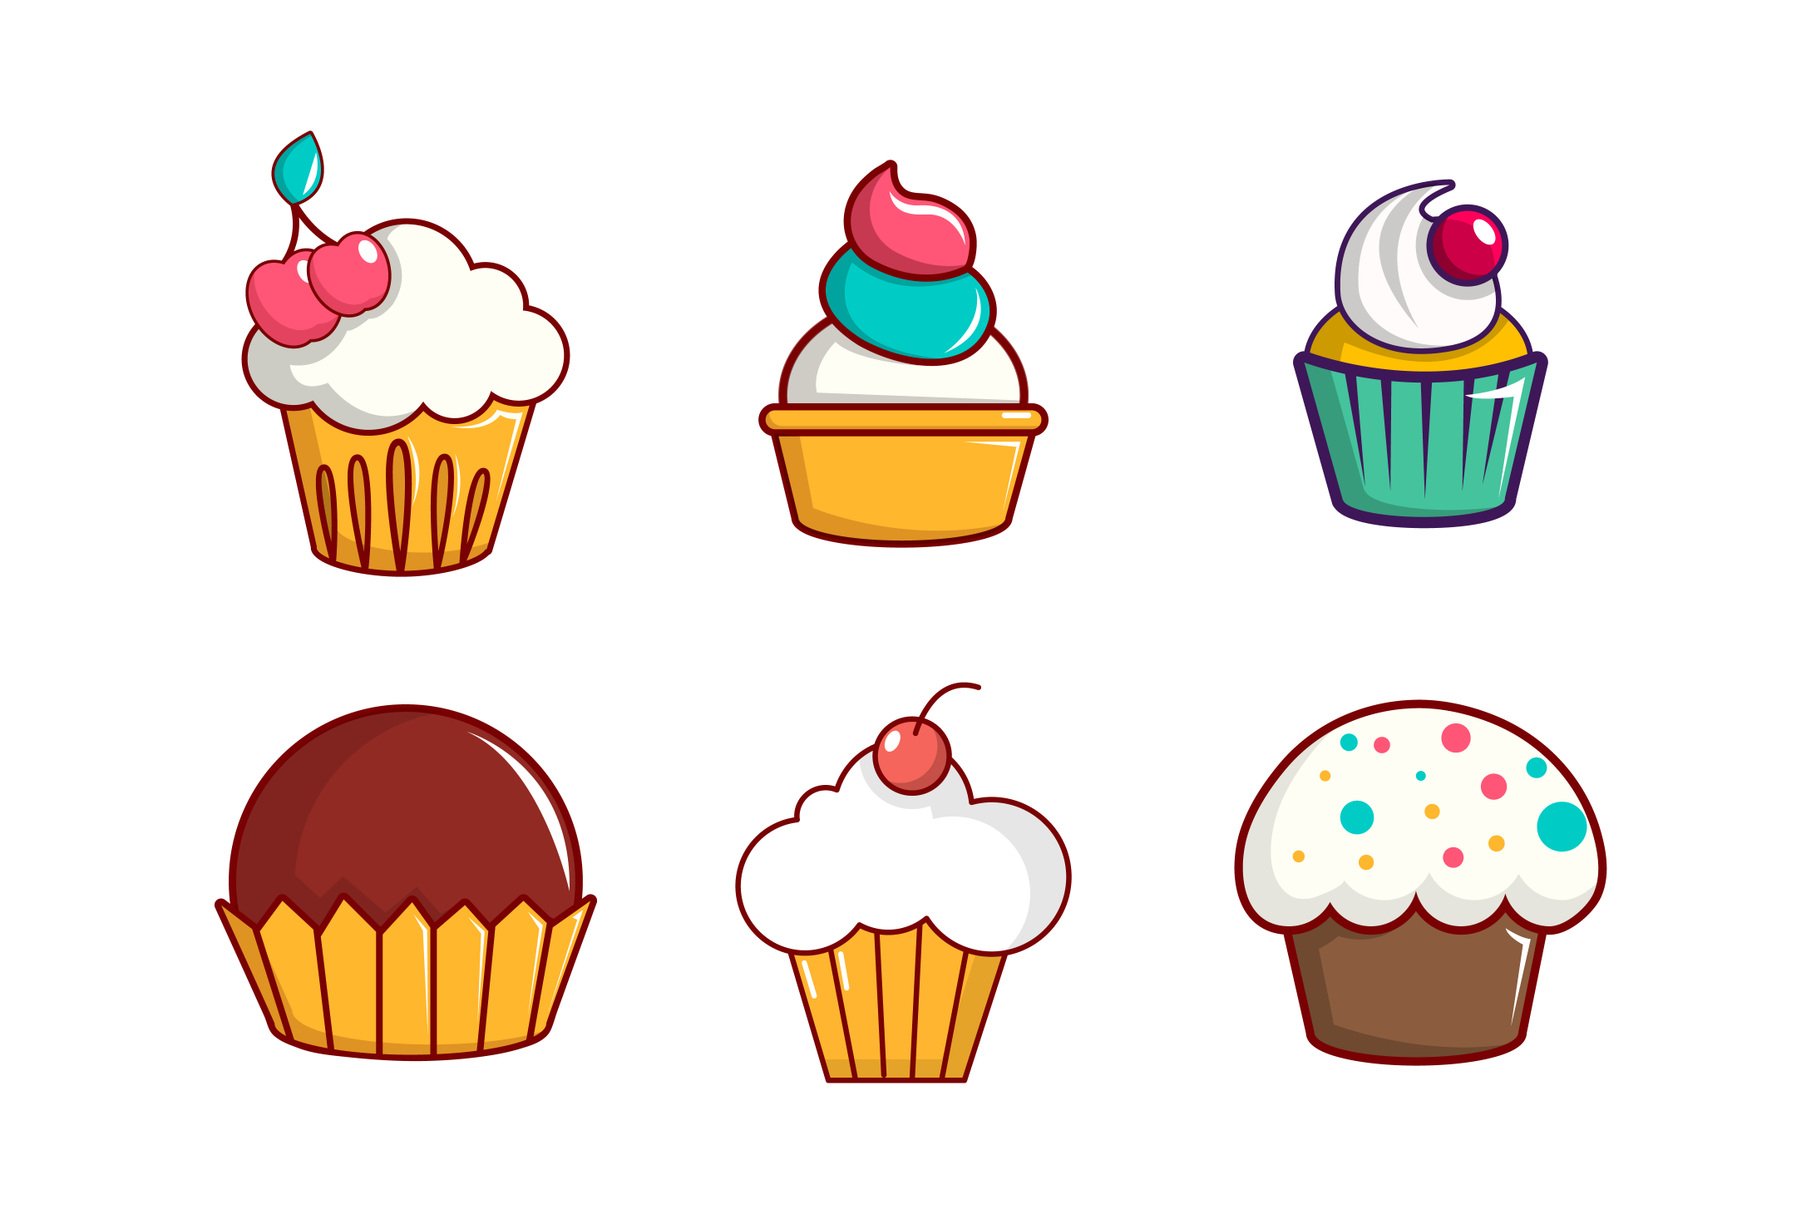 Cupcake icon set, cartoon style cover image.